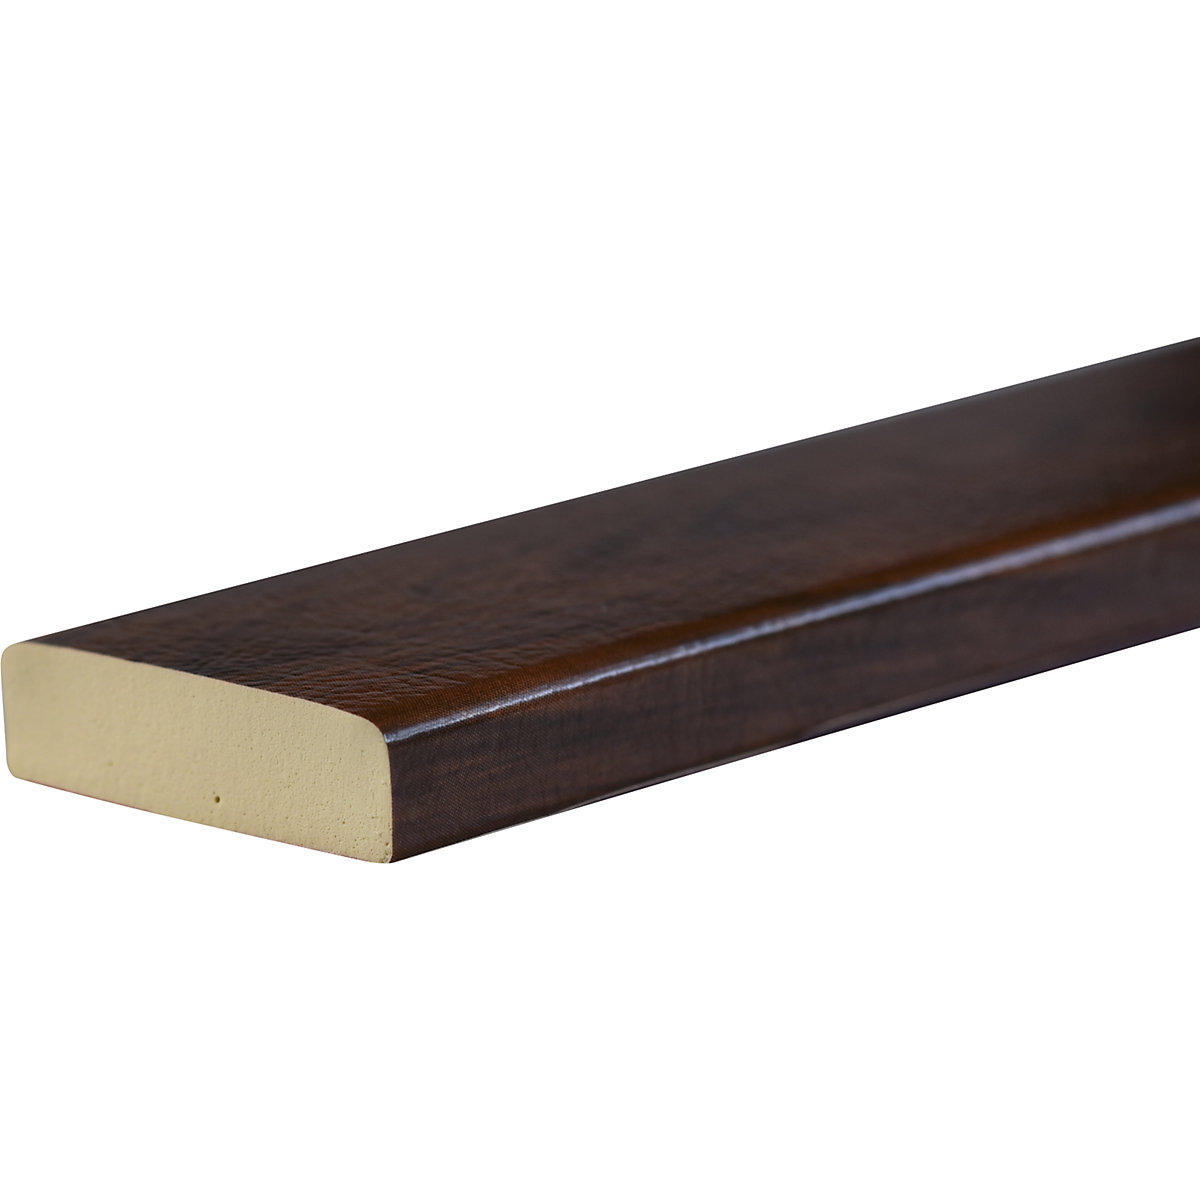 Knuffi®-oppervlaktebescherming – SHG, type S, stuk van 1 m, gecoat hout cherry-32